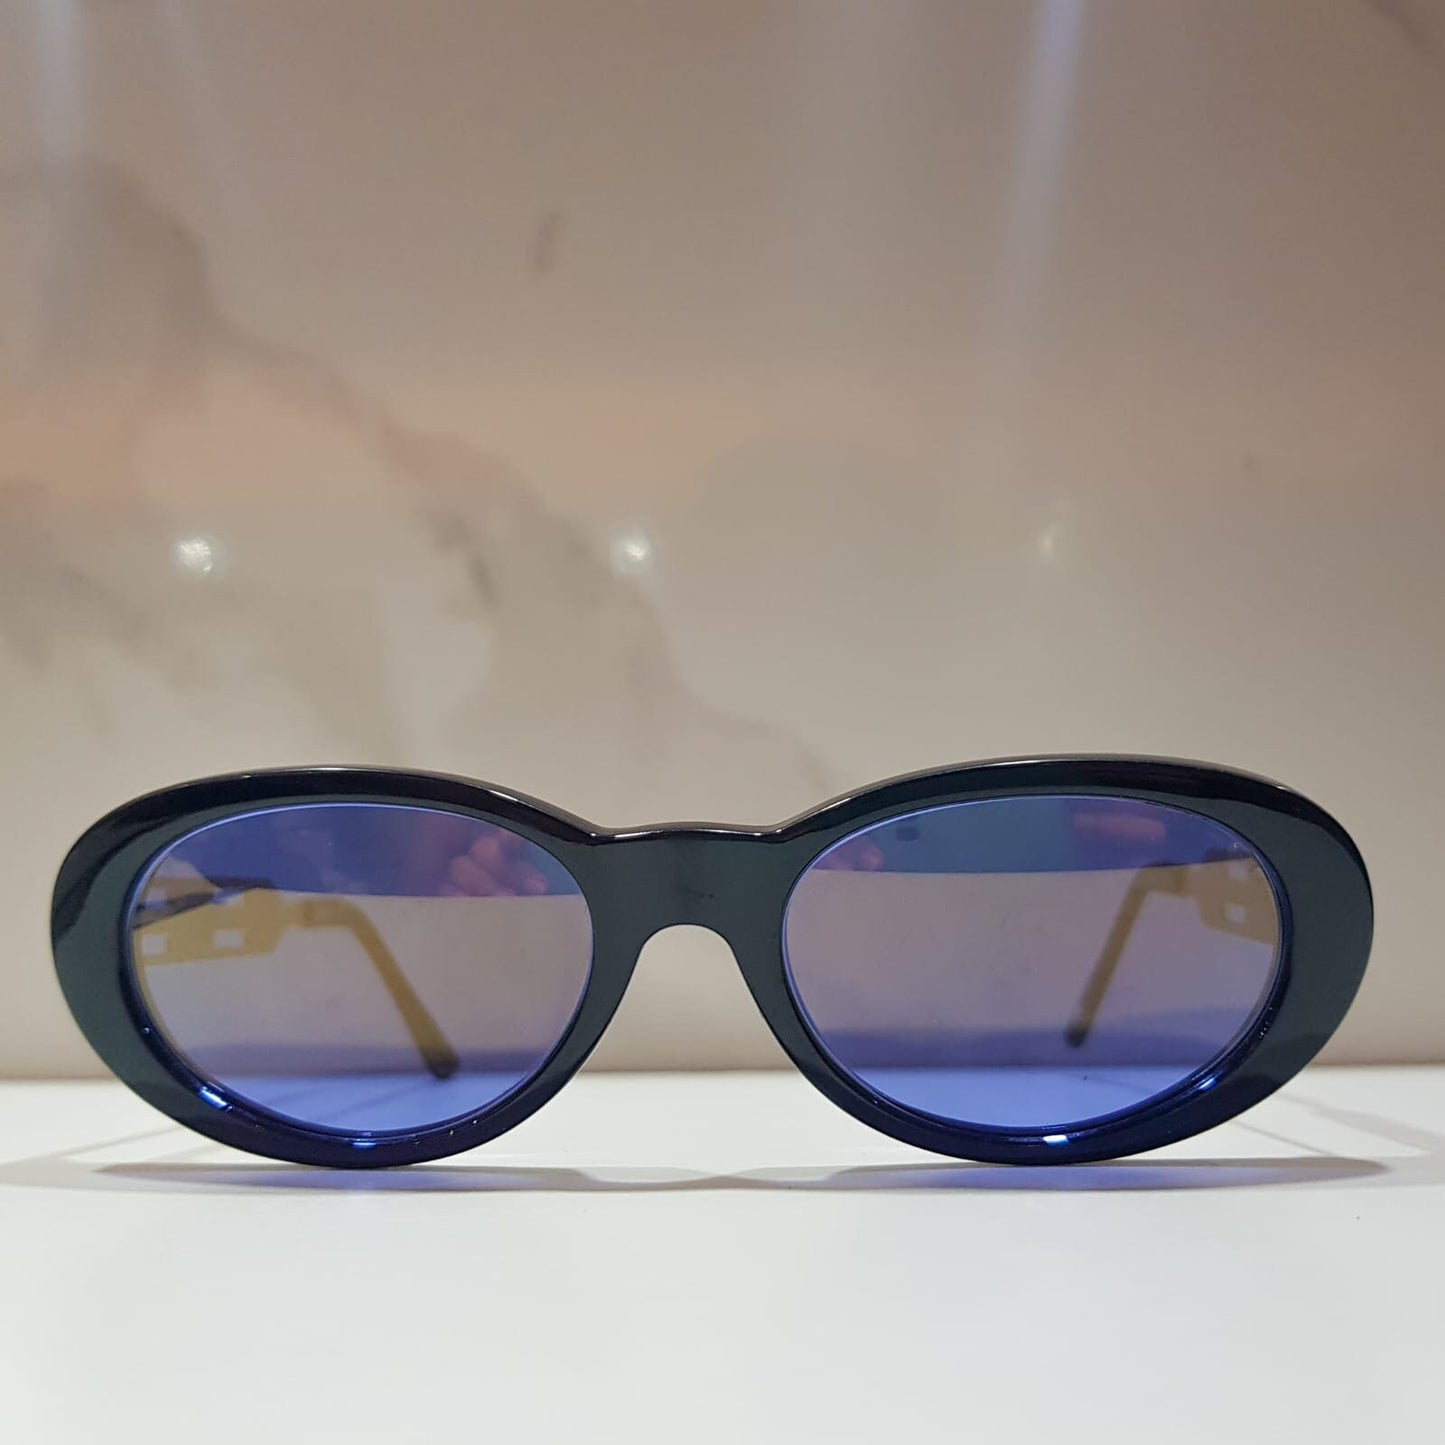 Versus Gianni Versace 90 年代太阳镜 brille lunette 眼镜 Versace